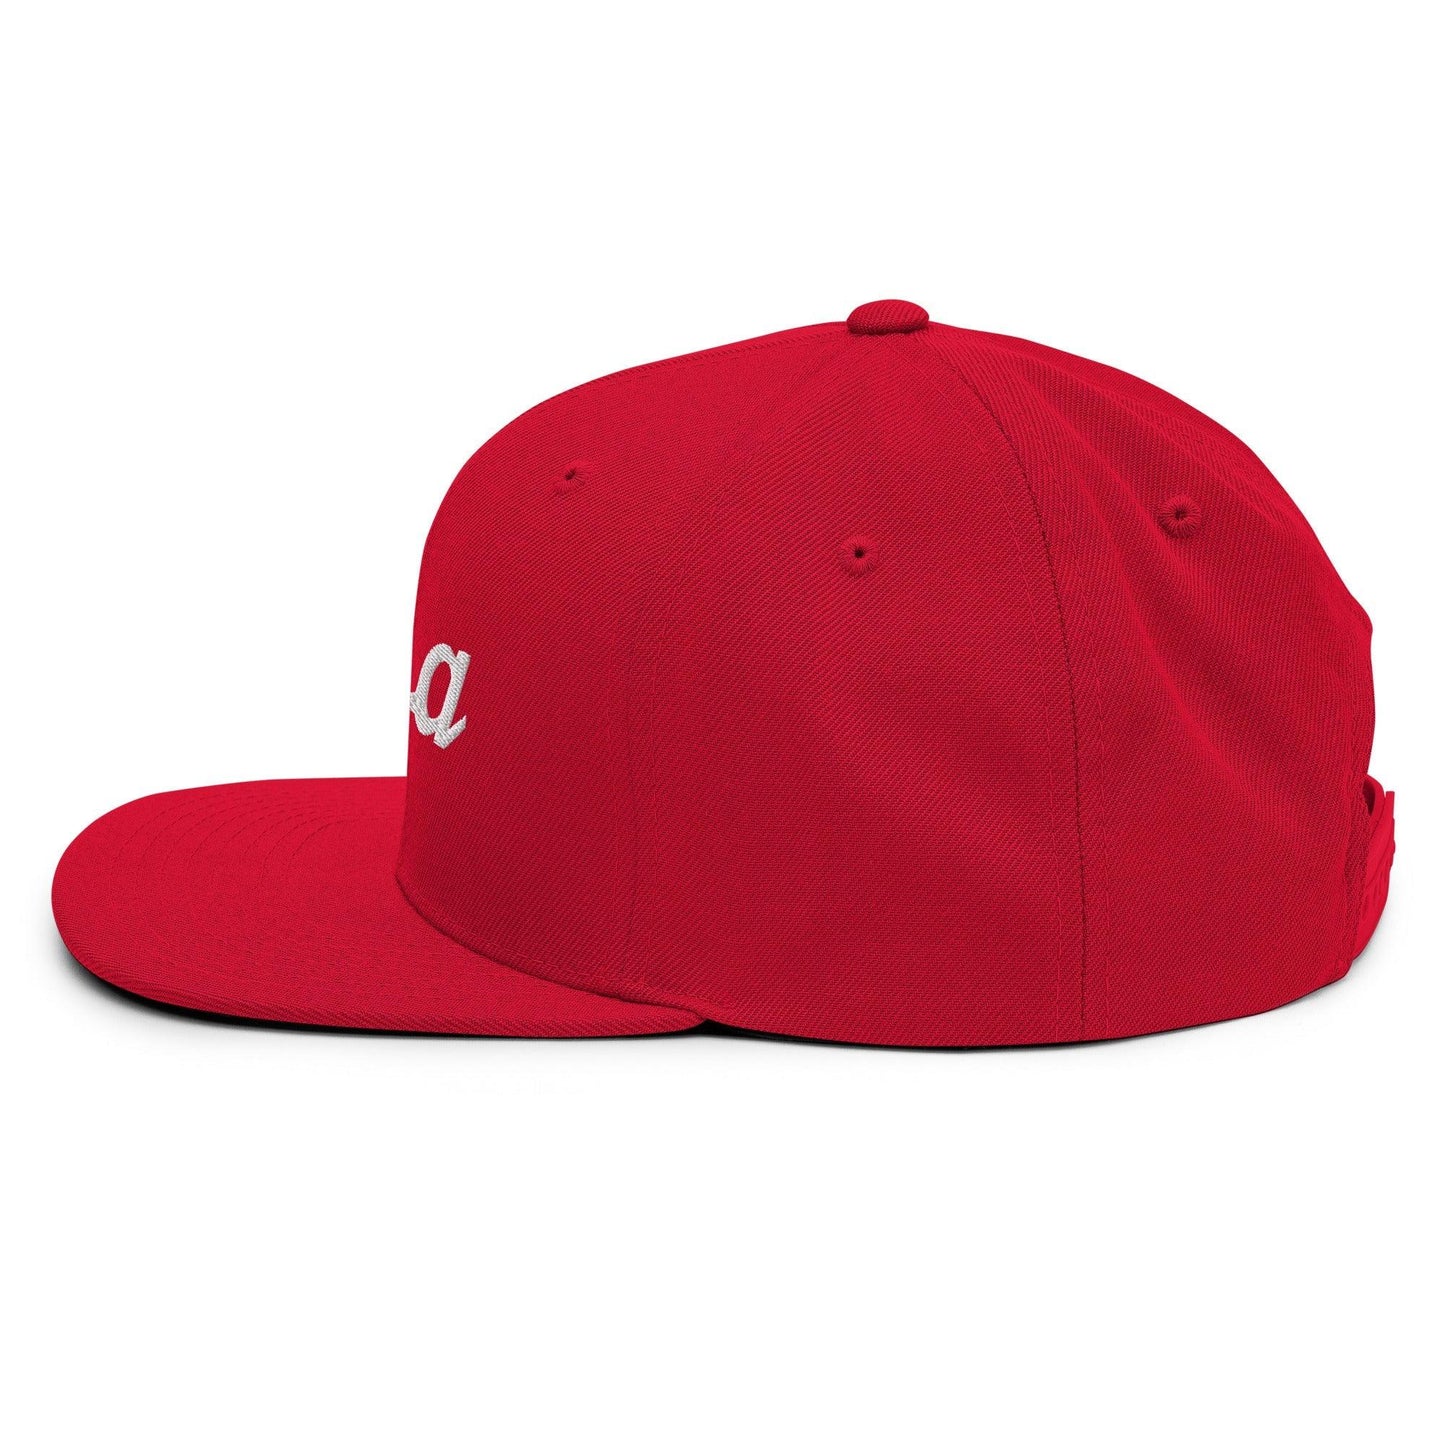 Tulsa Vintage Sports Script Snapback Hat Red